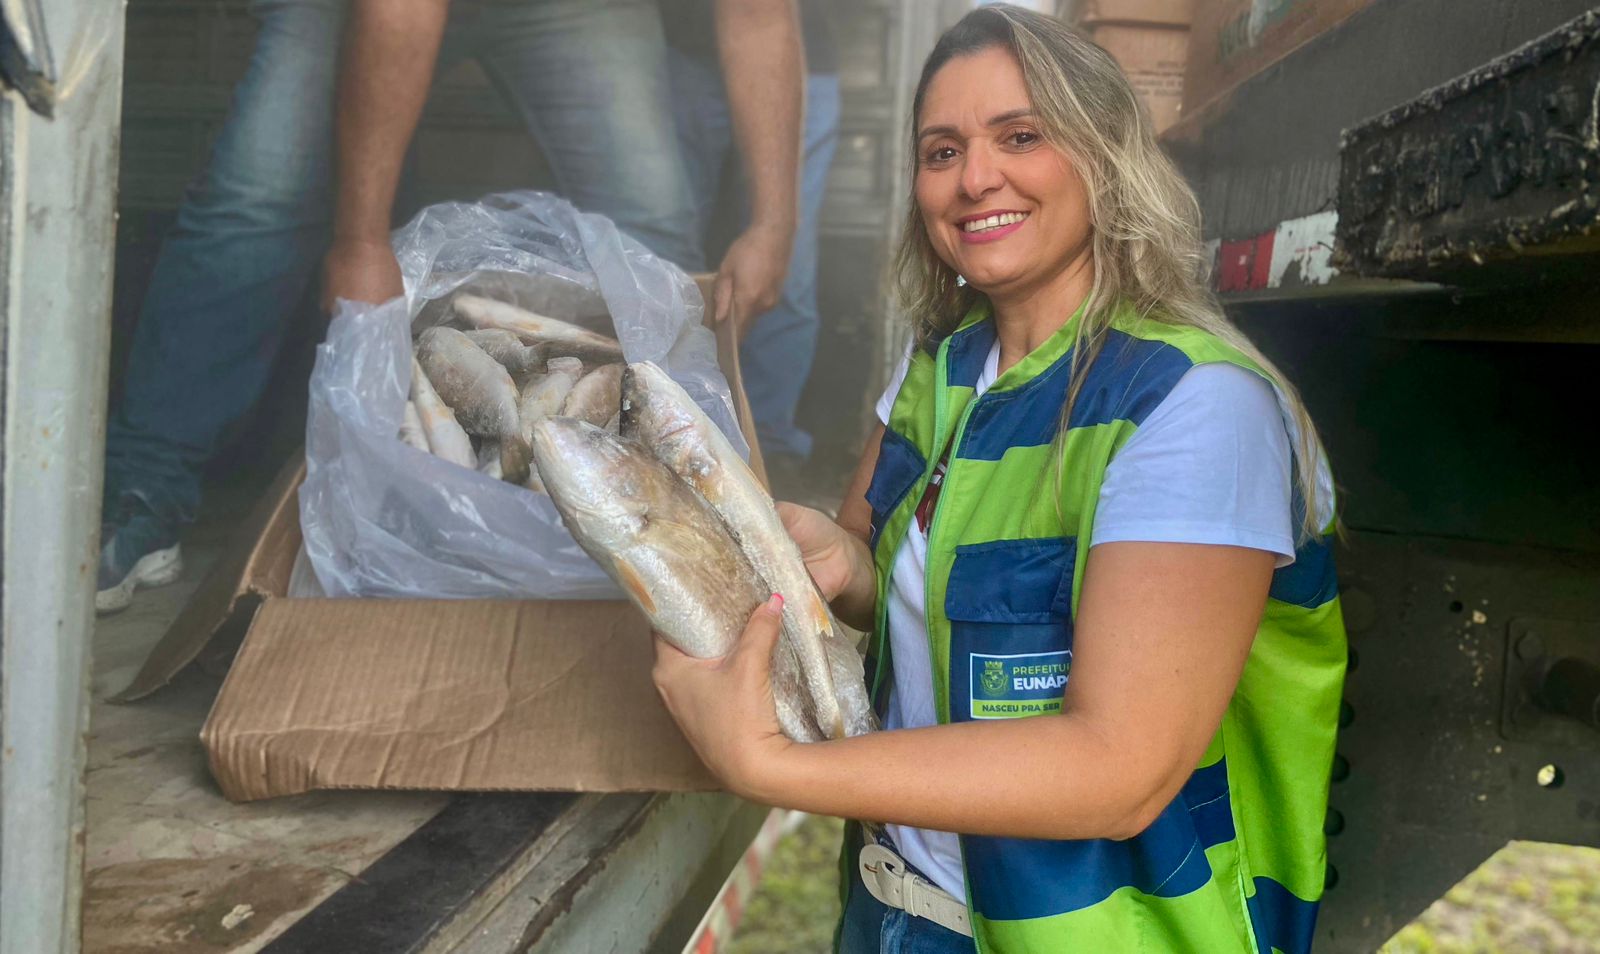 18 mil quilos de peixes entregues: Prefeita Cordélia bate recorde na distribuição de peixes na Semana Santa pelo 3º ano consecutivo 40